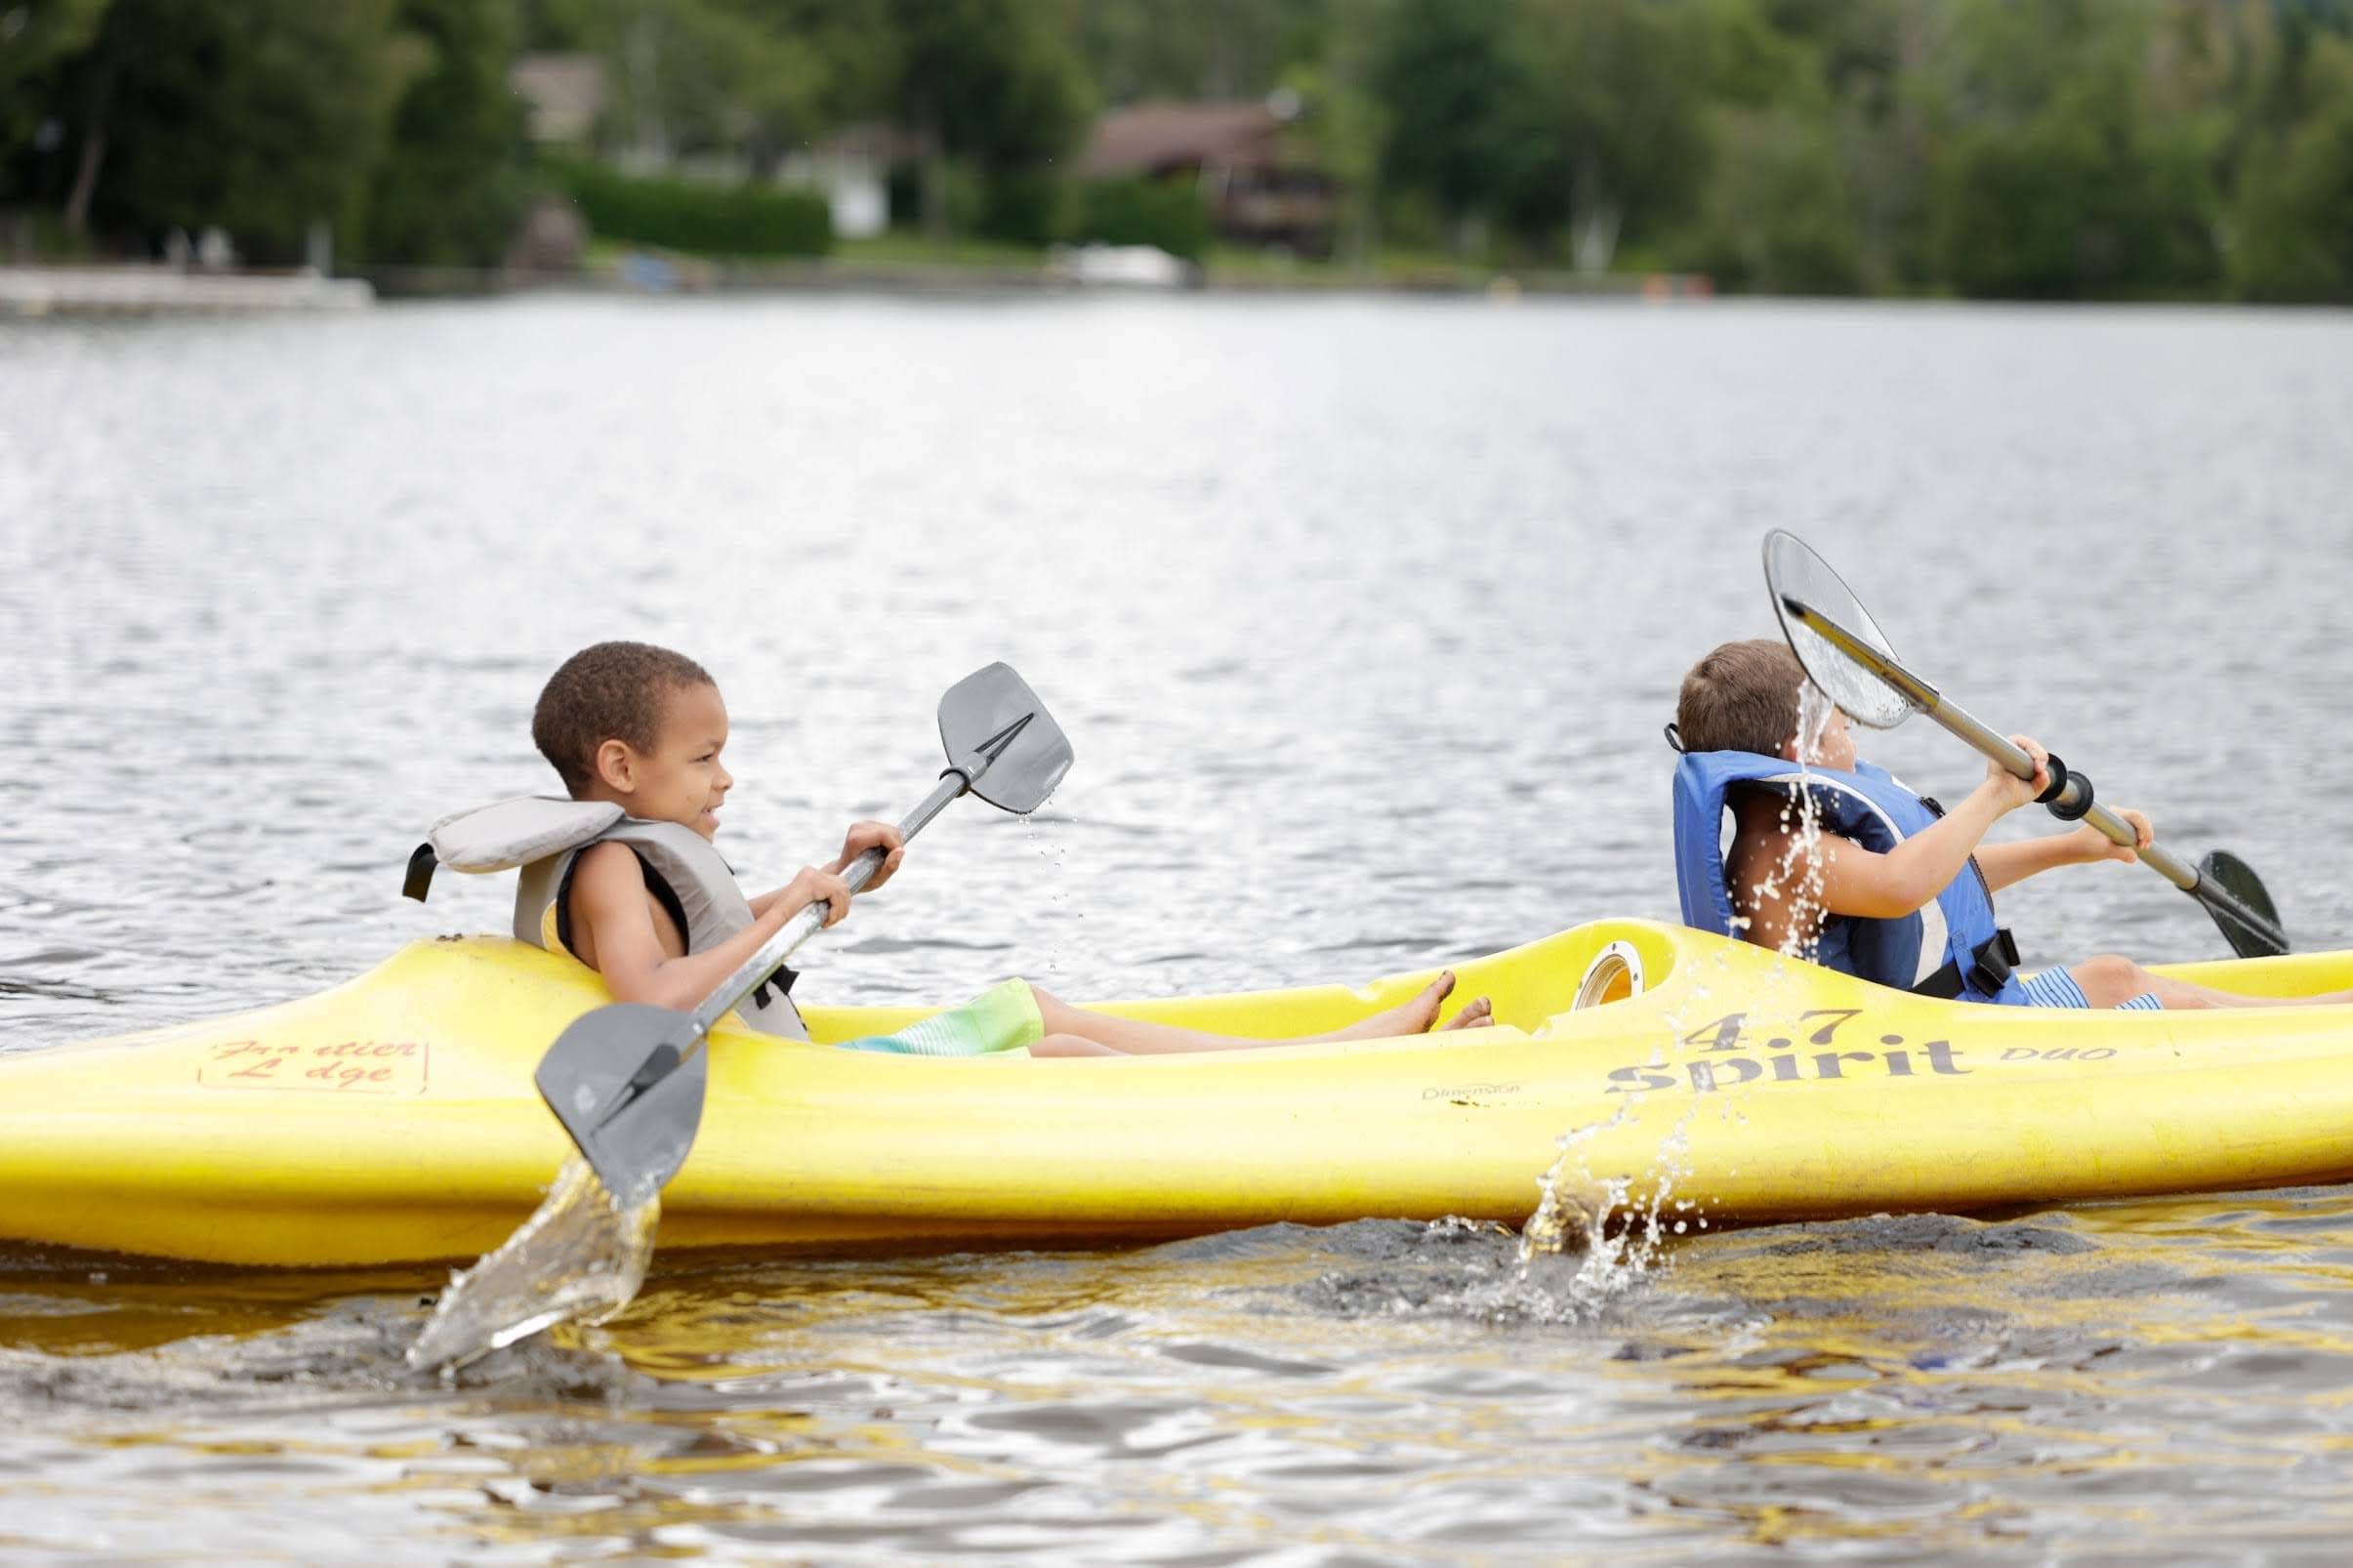 Children in a canoe